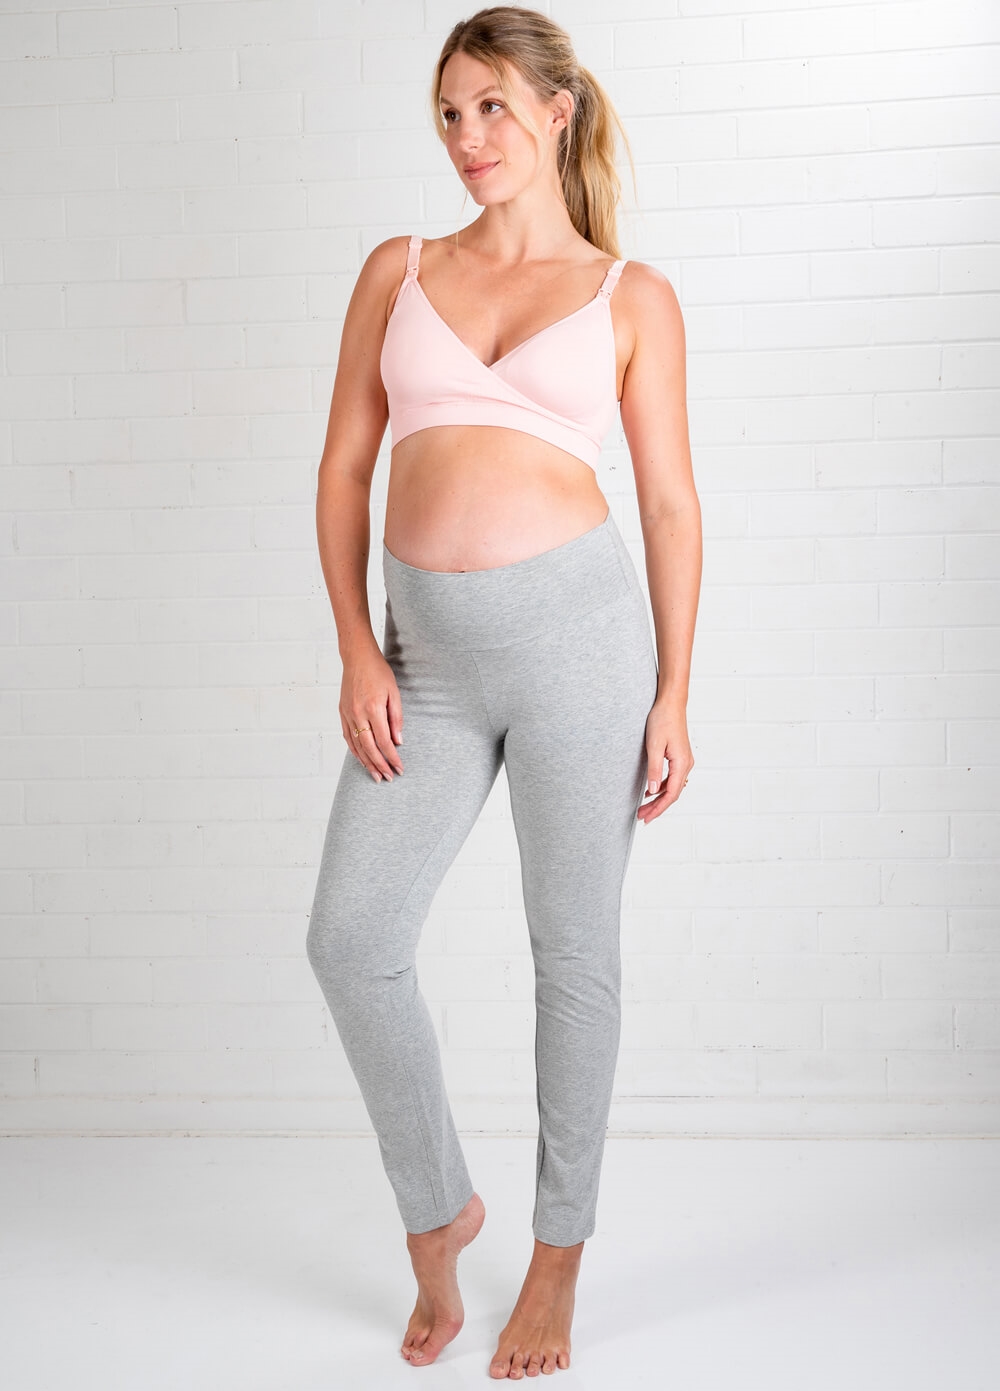 Trimester - Libertine Cropped Maternity Yoga Pants